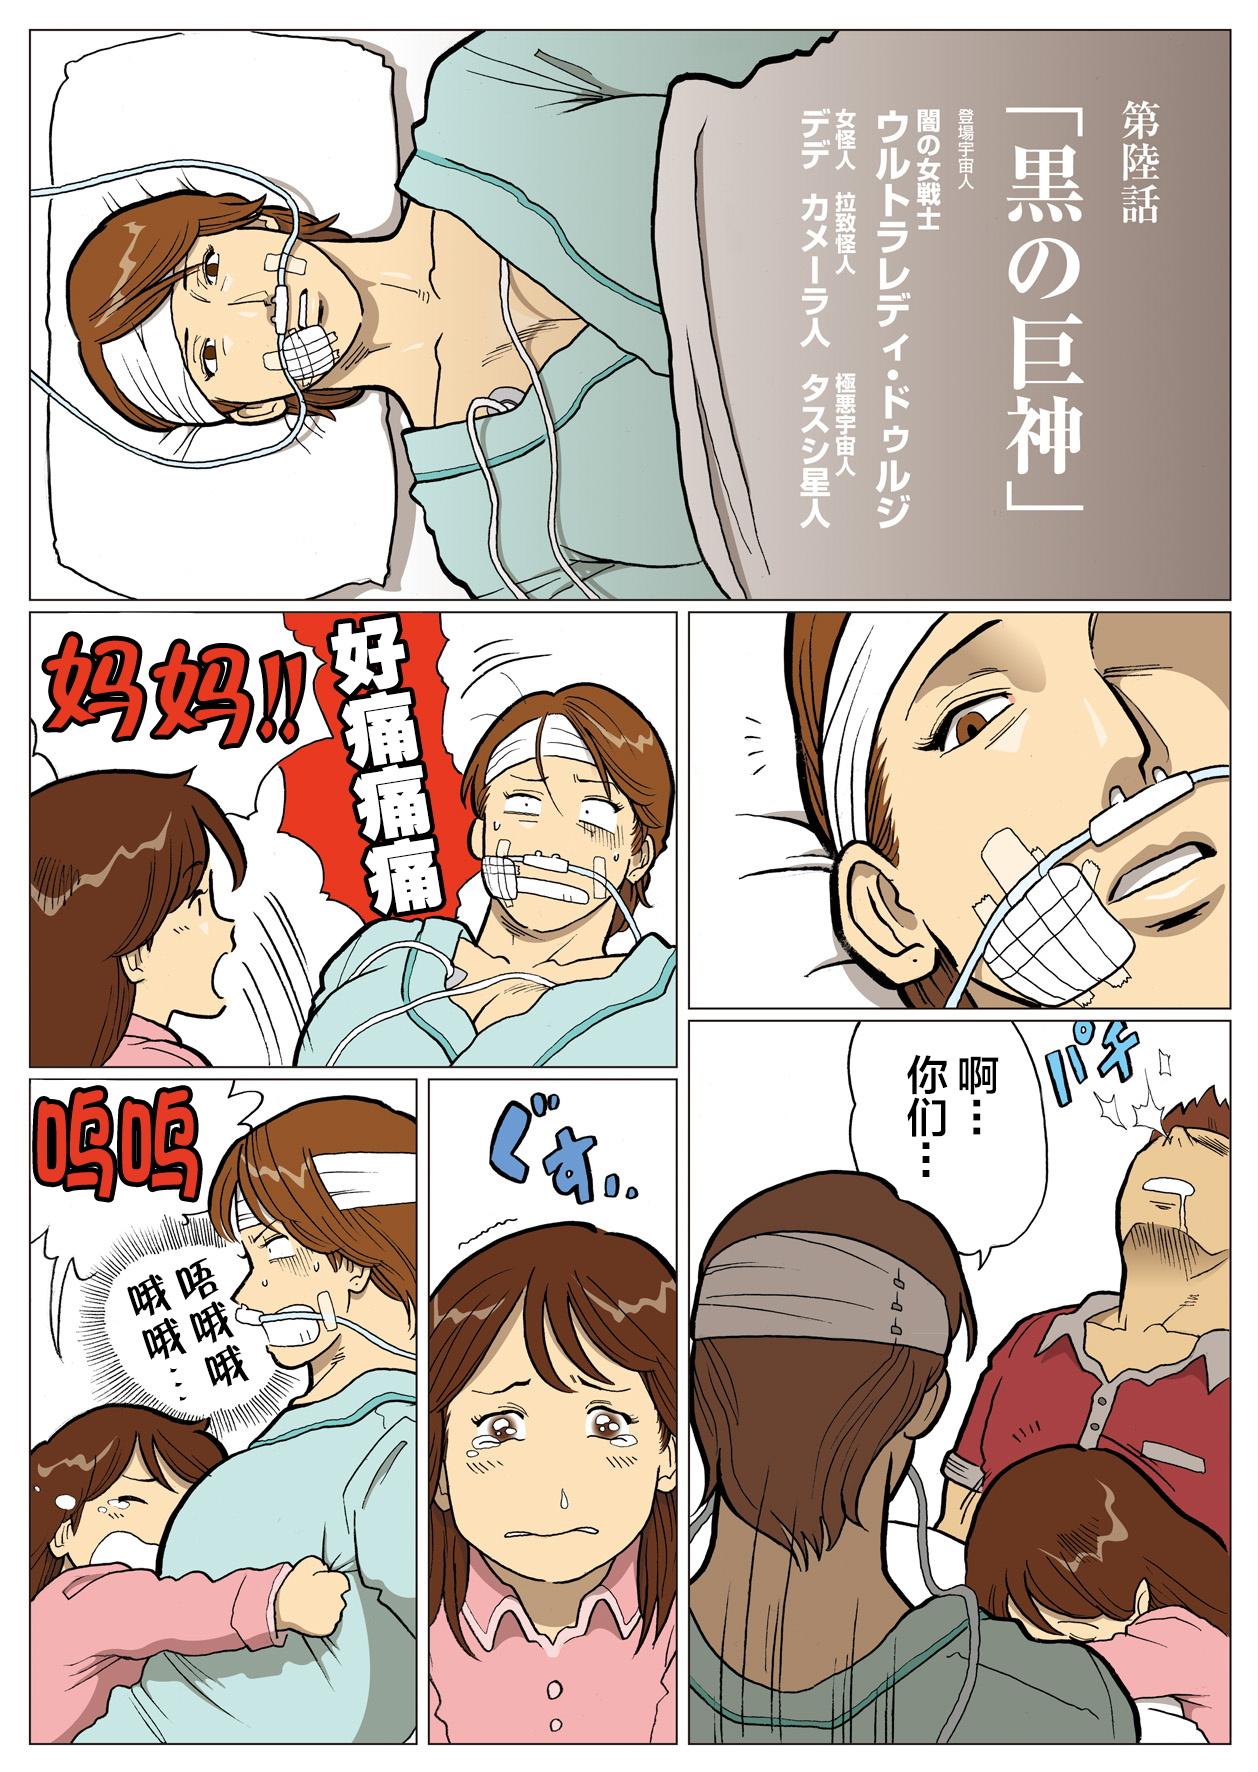 Babysitter Mousou Tokusatsu Series: Ultra Madam 6 - Ultraman High Definition - Page 2